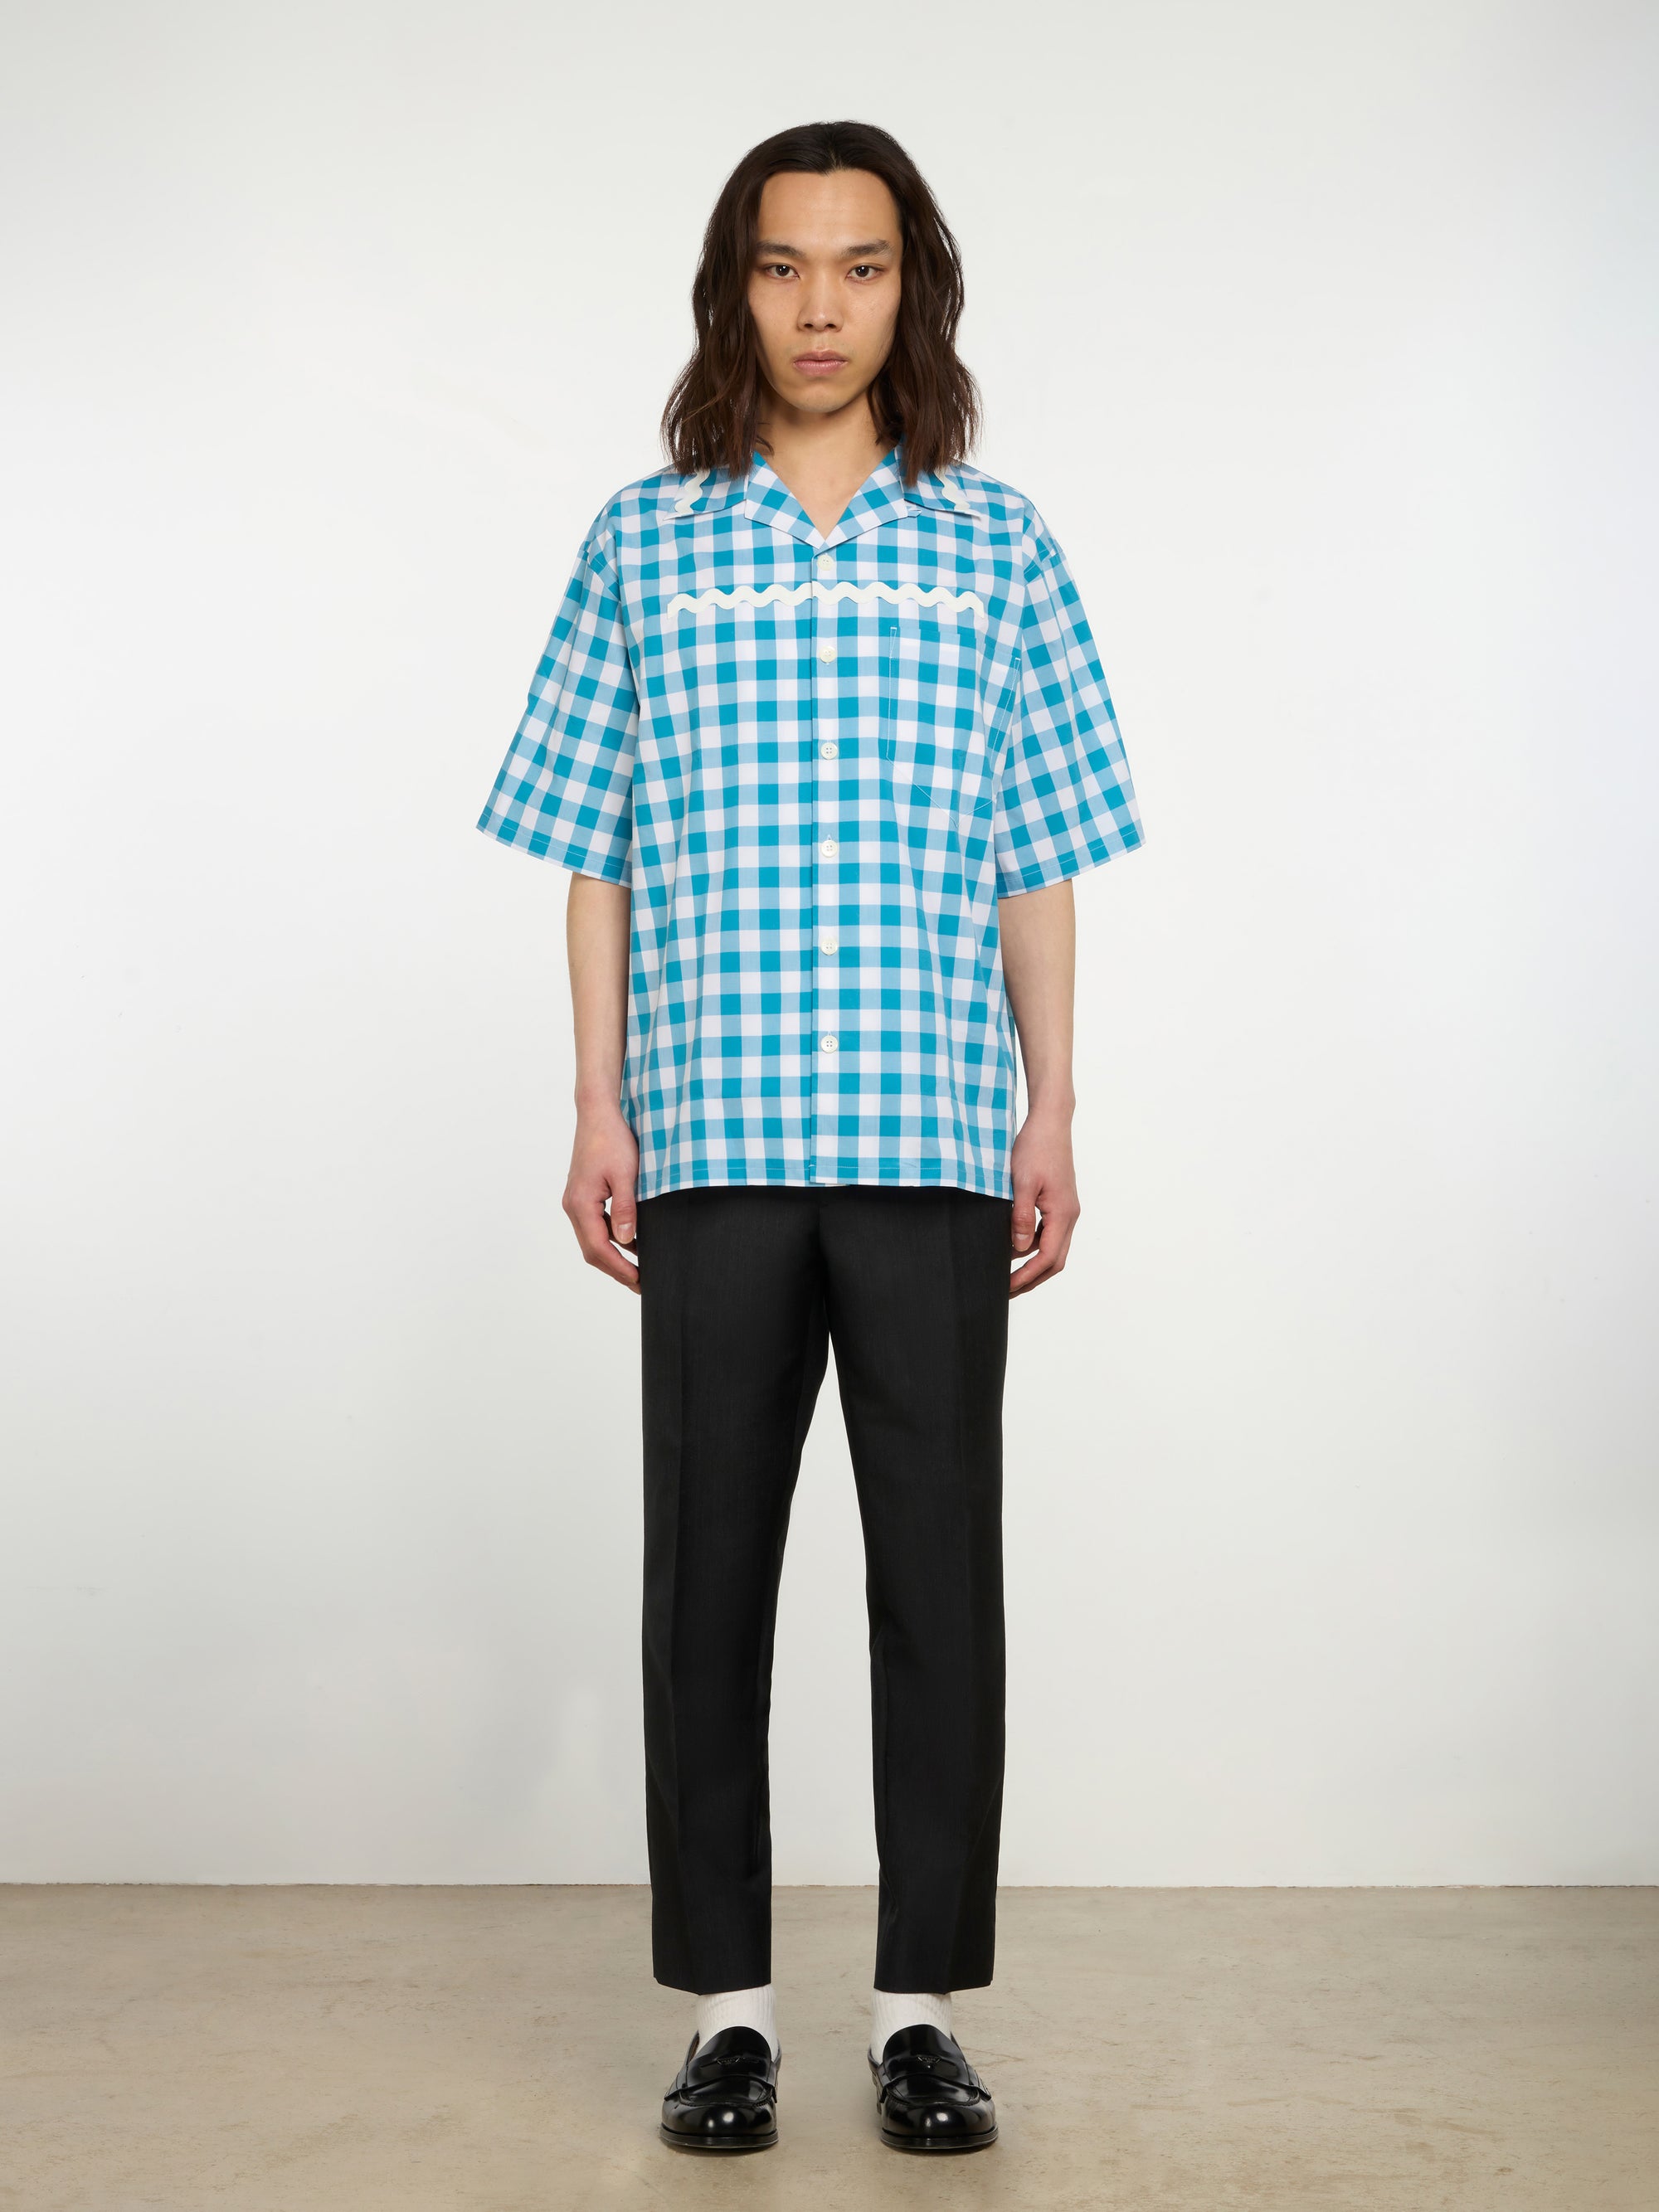 Prada - Men’s Check Shirt - (White/Turquoise) view 4